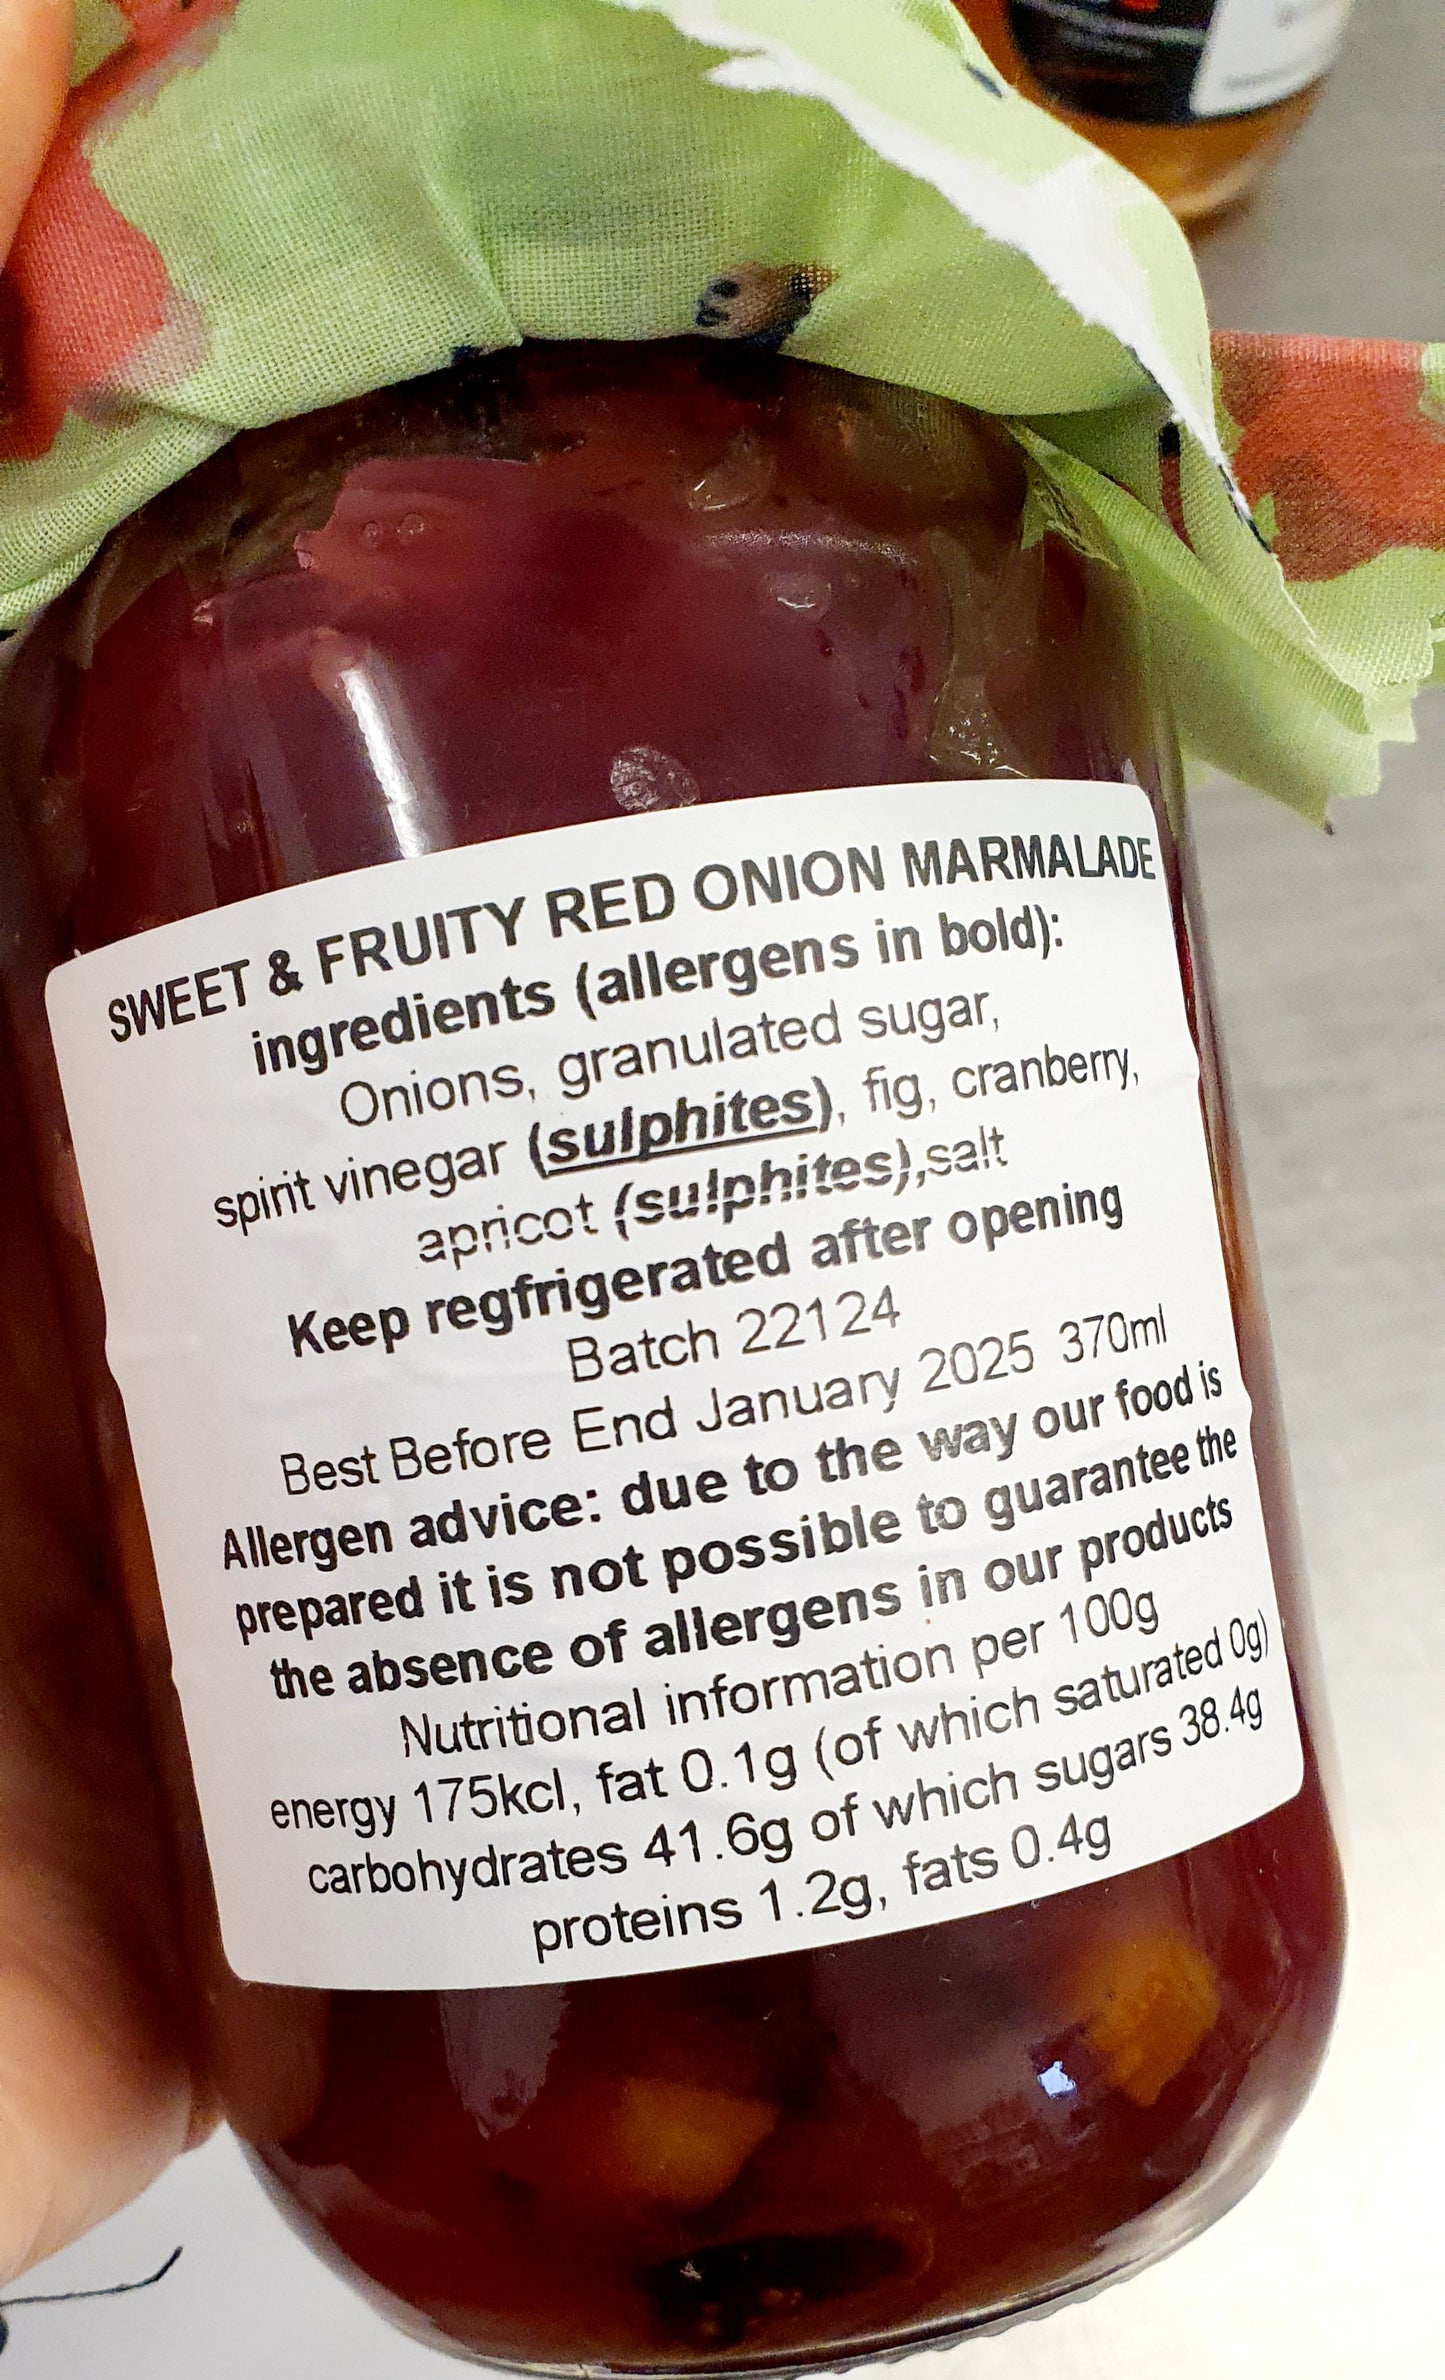 Sweet & Fruity Red Onion Marmalade